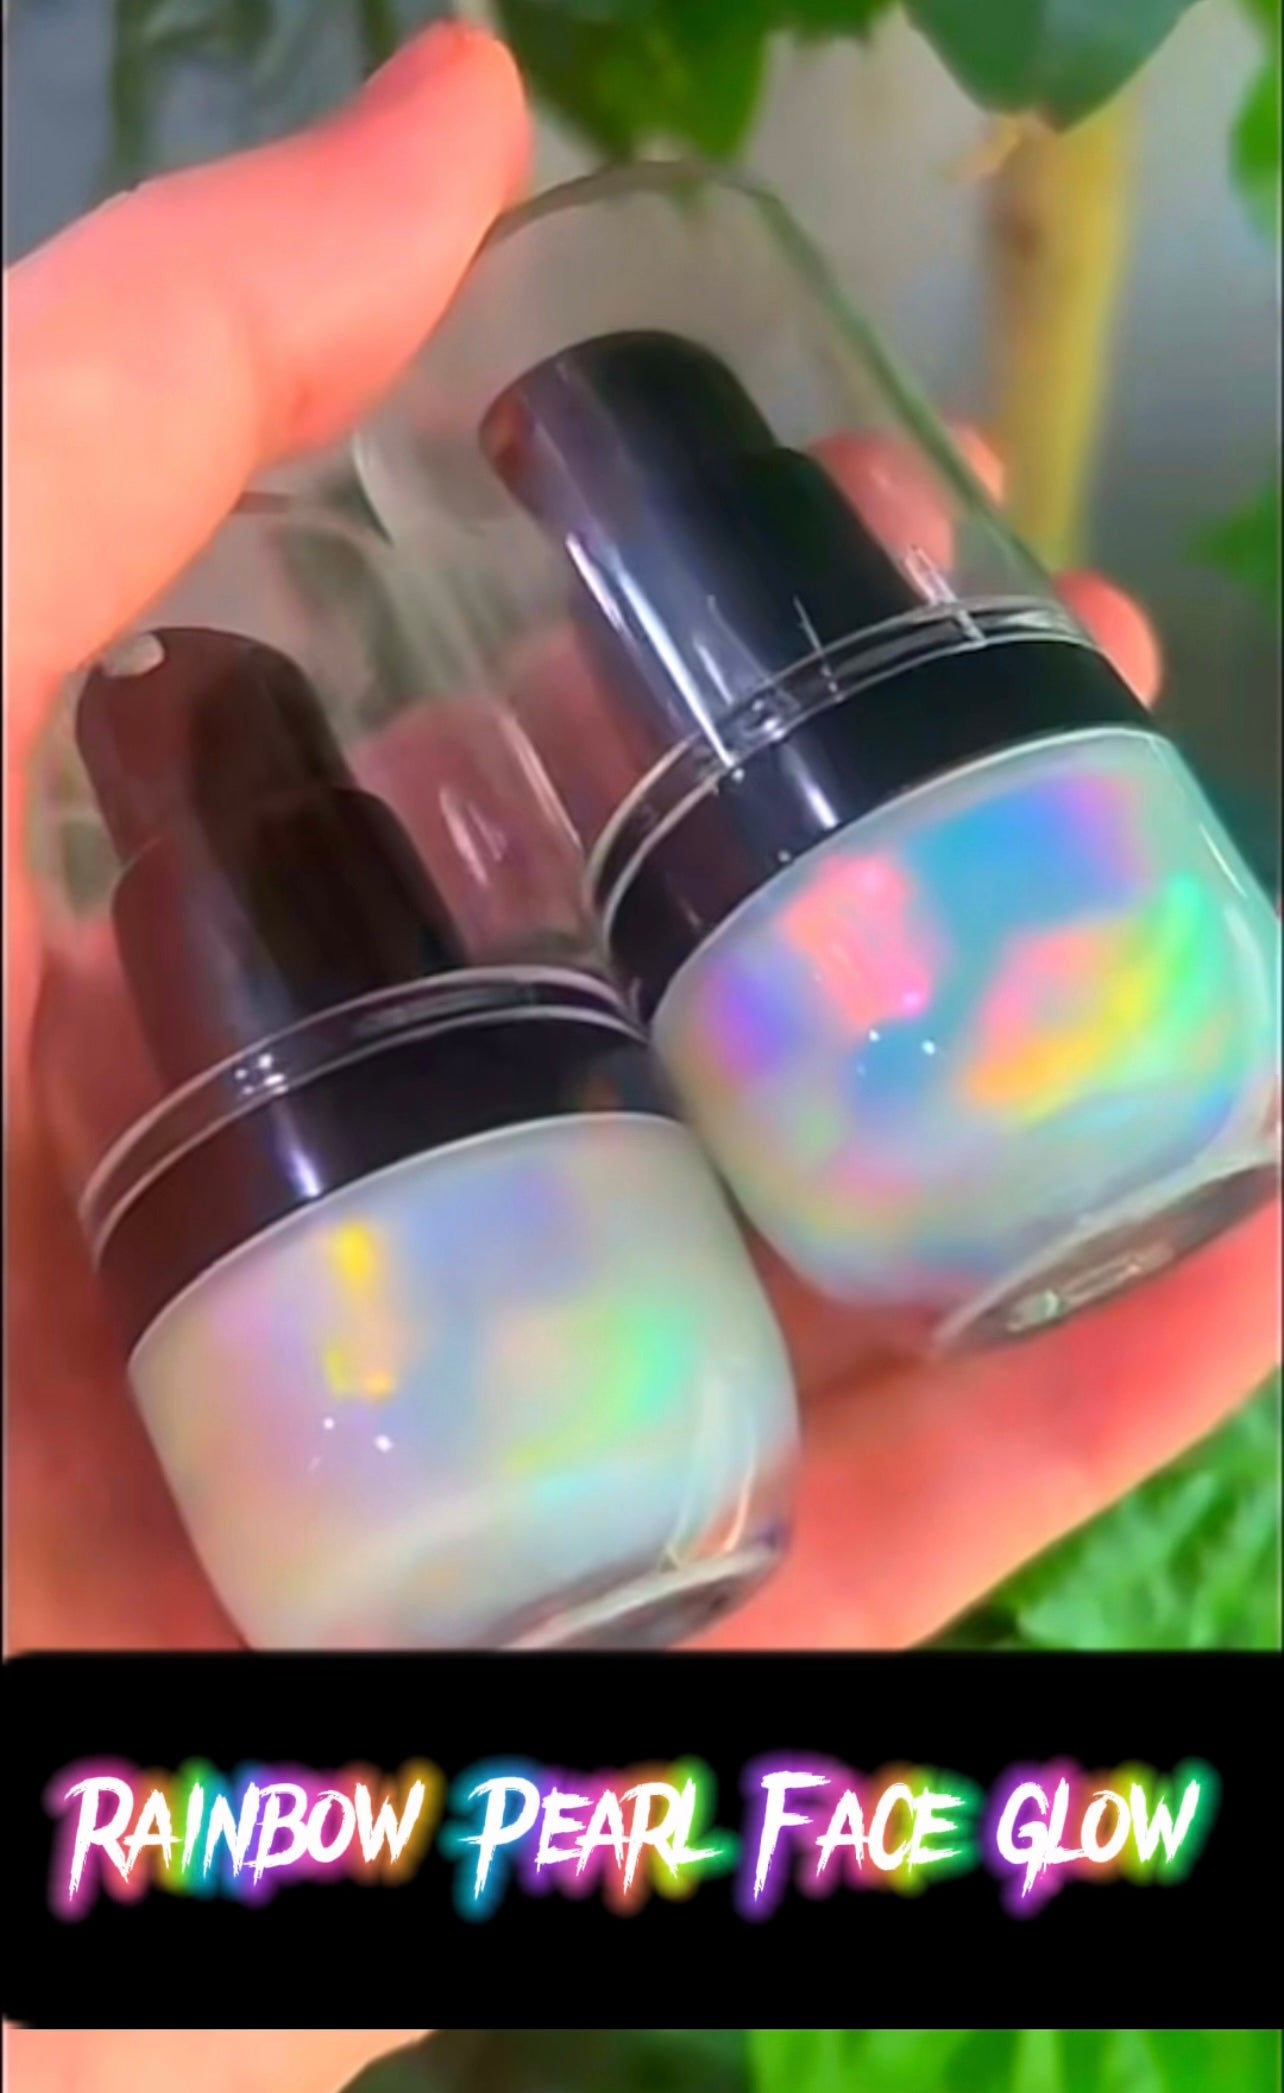 Rainbow Pearl Face Glow